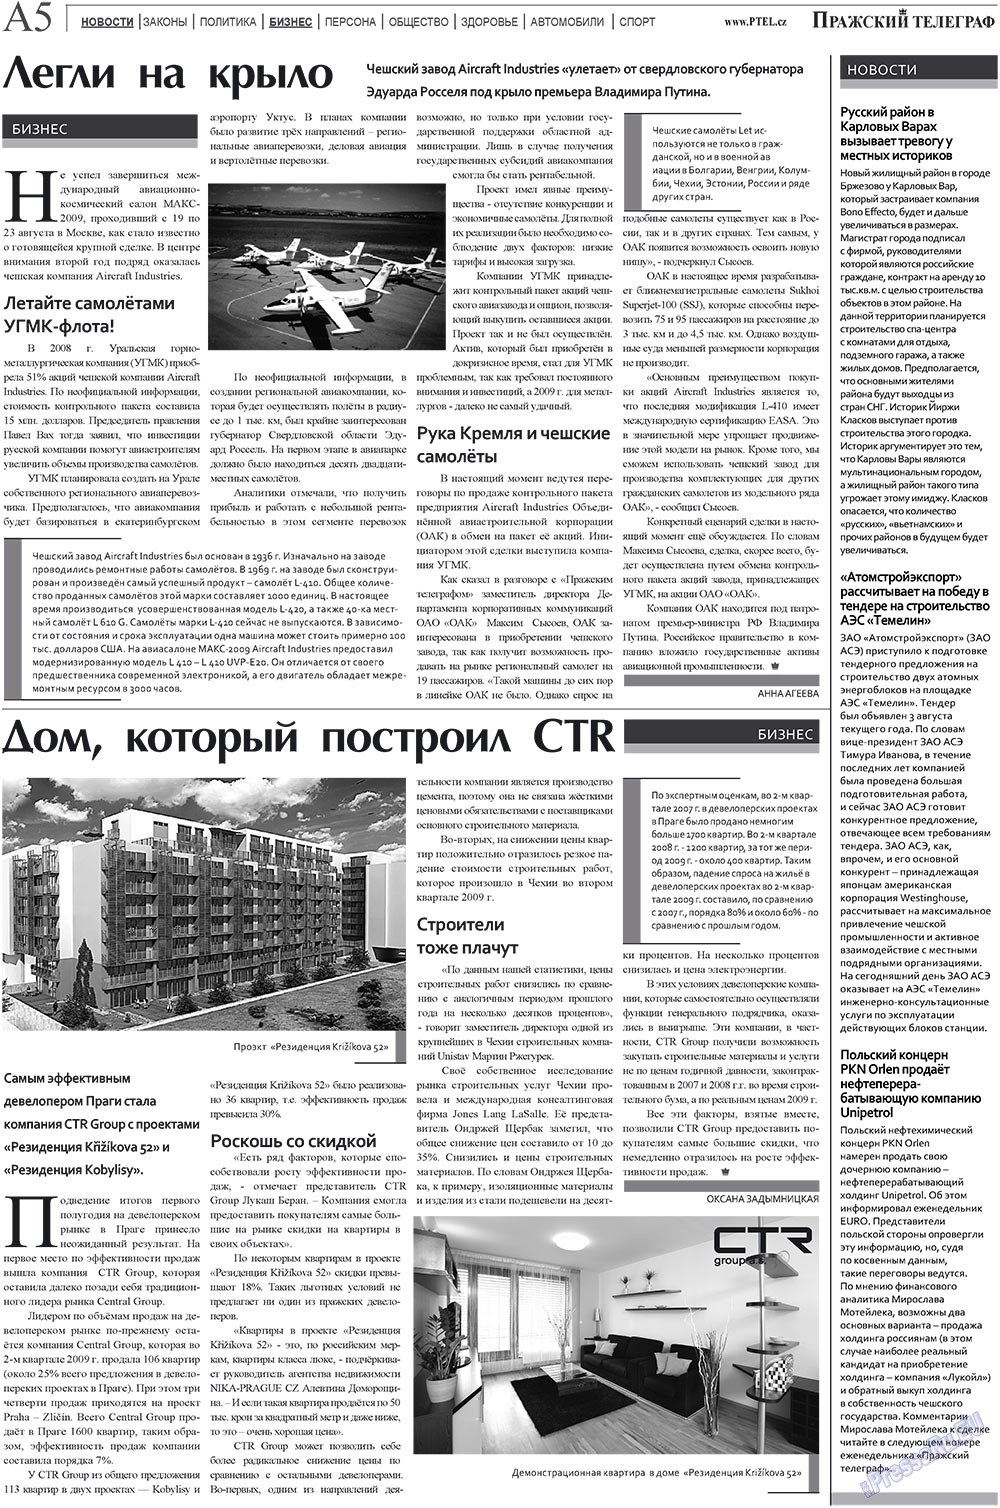 Пражский телеграф, газета. 2009 №19 стр.5